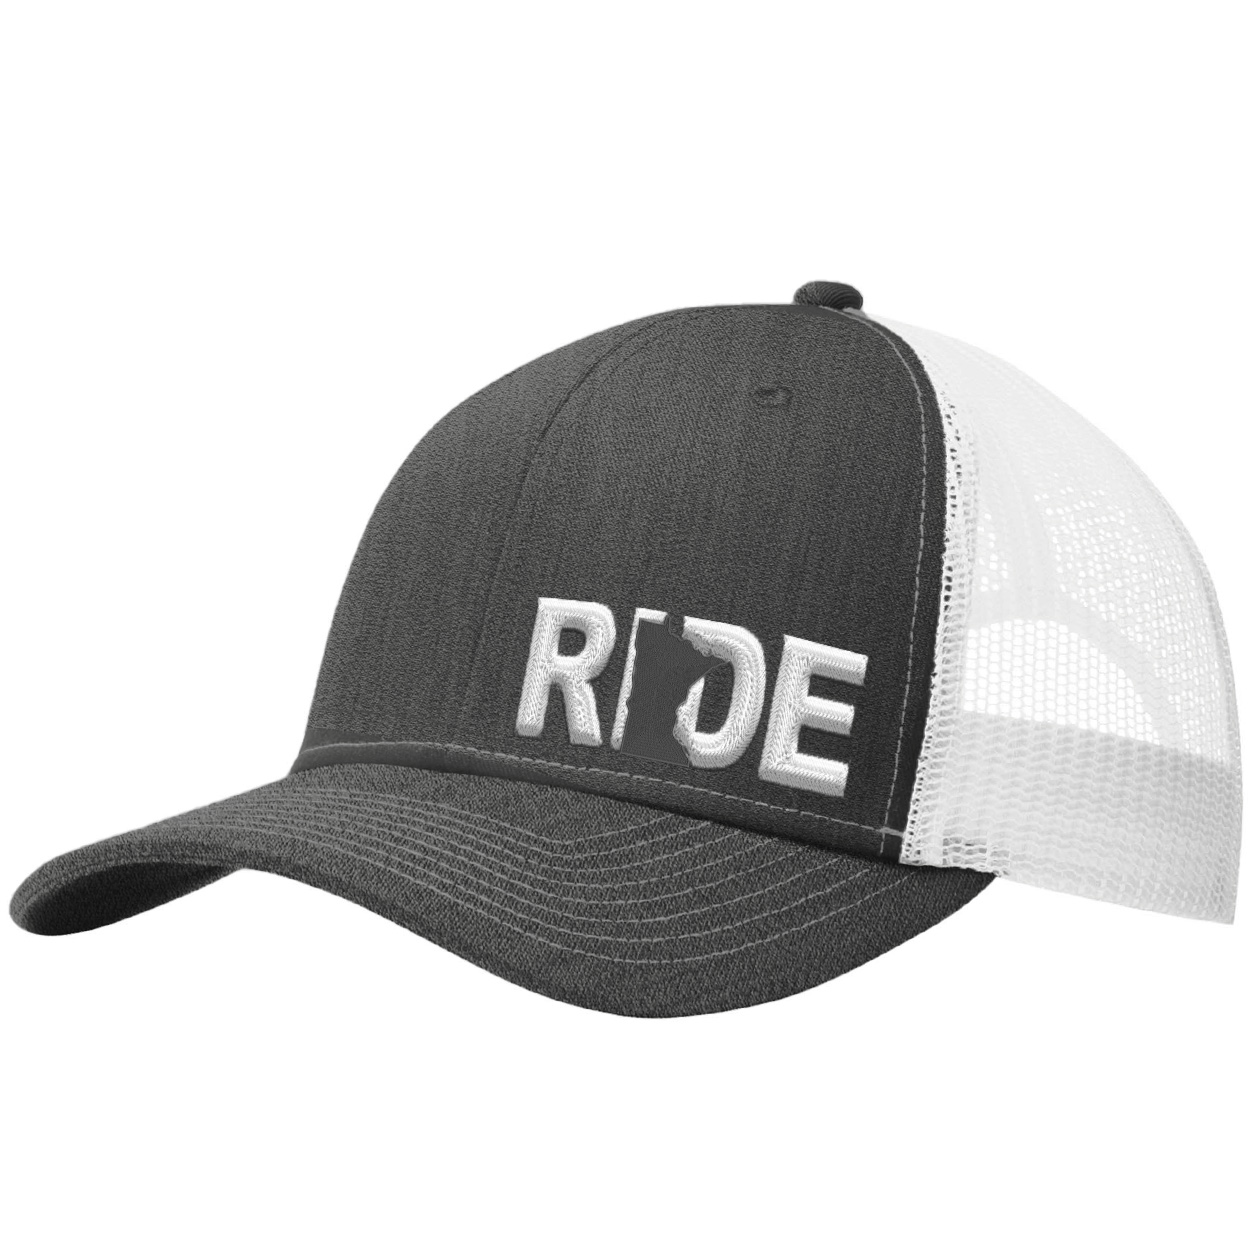 Ride Minnesota Night Out Pro Embroidered Snapback Trucker Hat Dark Gray/White